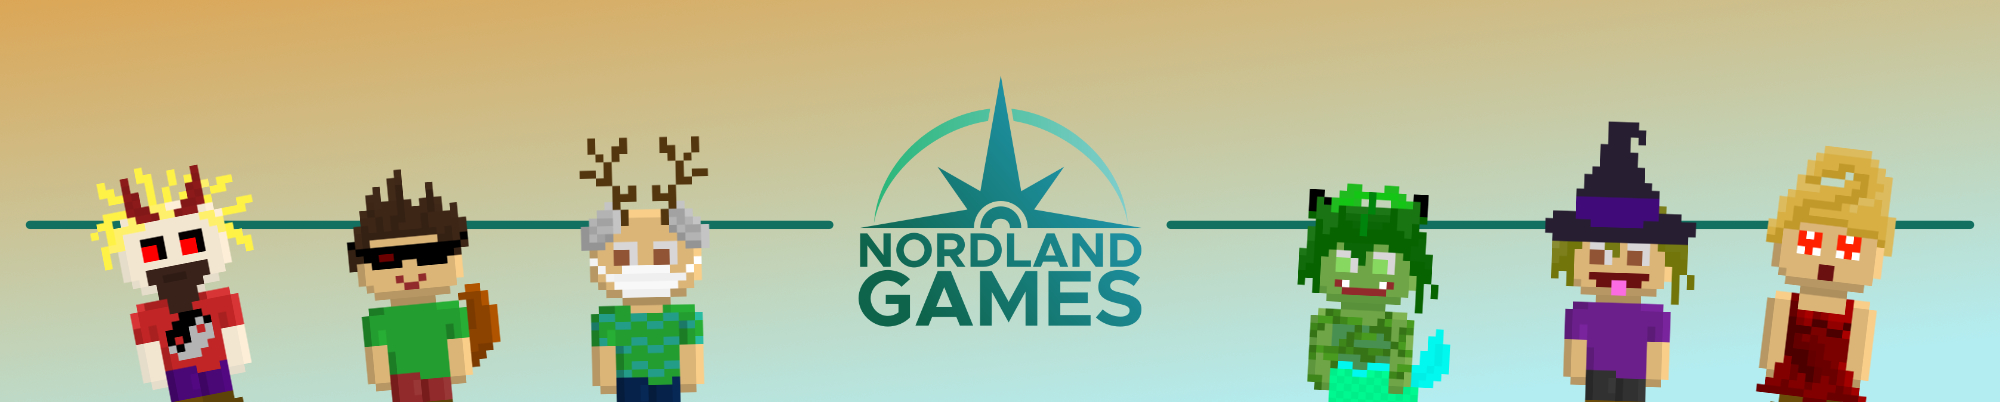 Nordland-Games